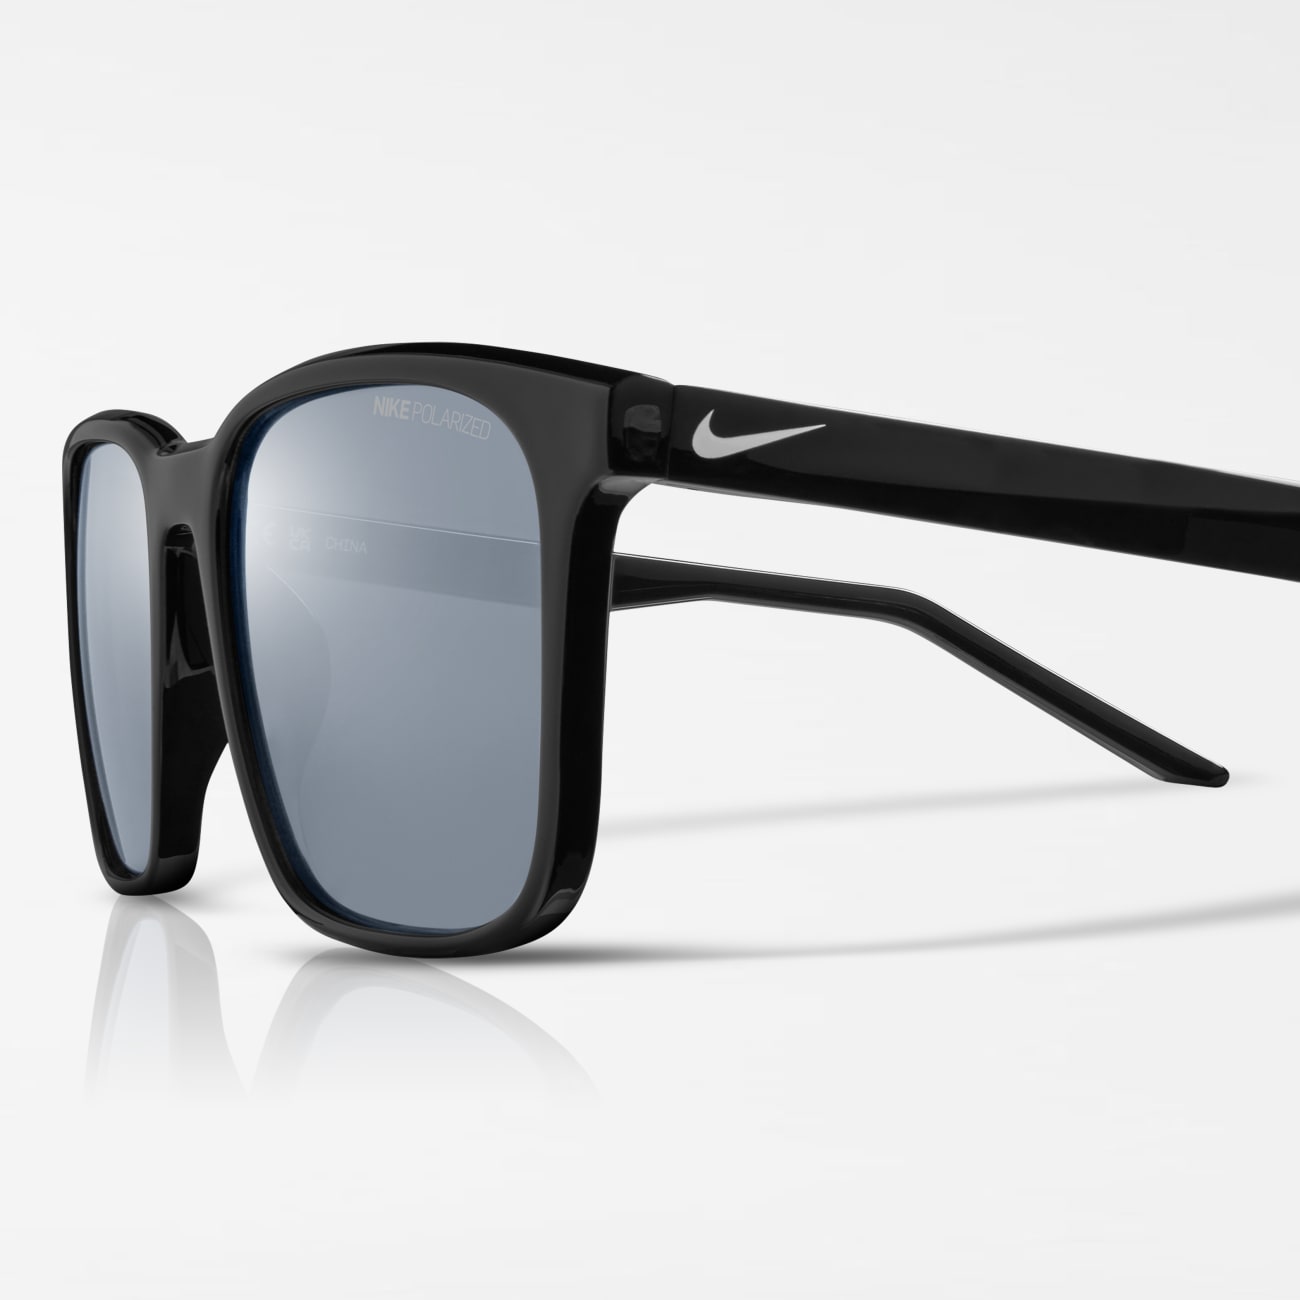 Men's Sunglasses | Nike Vision